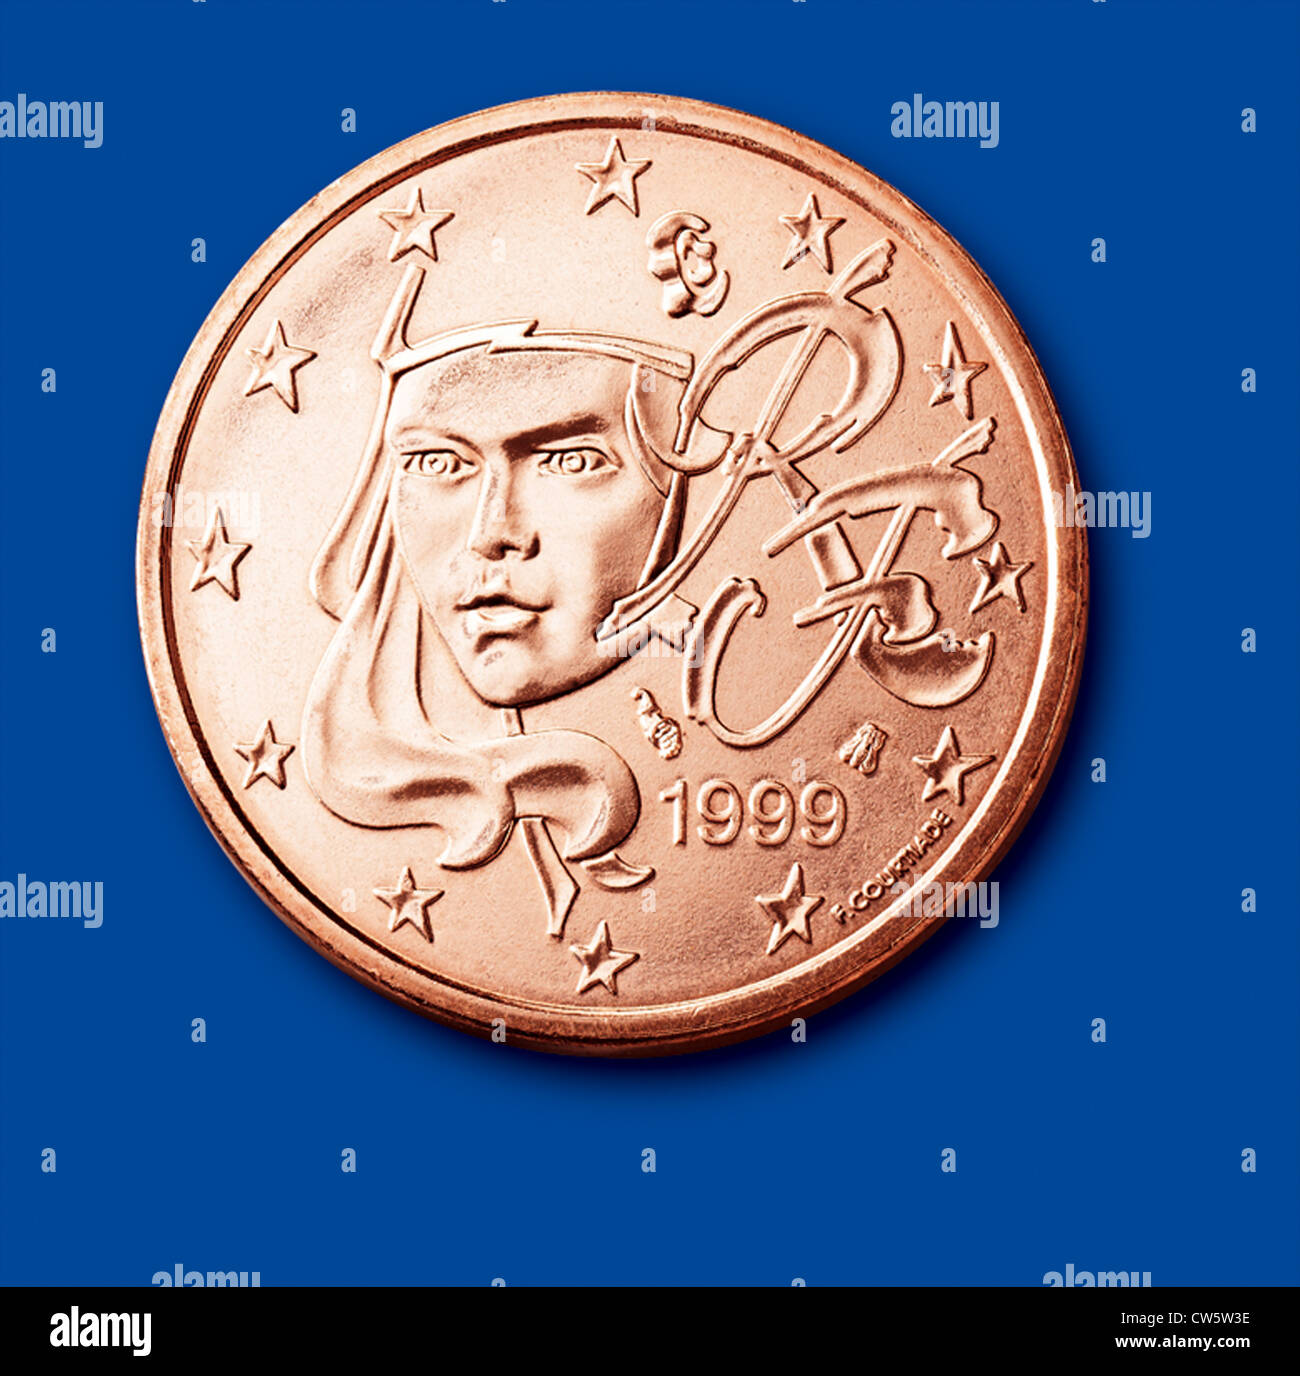 Moneta da 5 centesimi (Francia Foto stock - Alamy